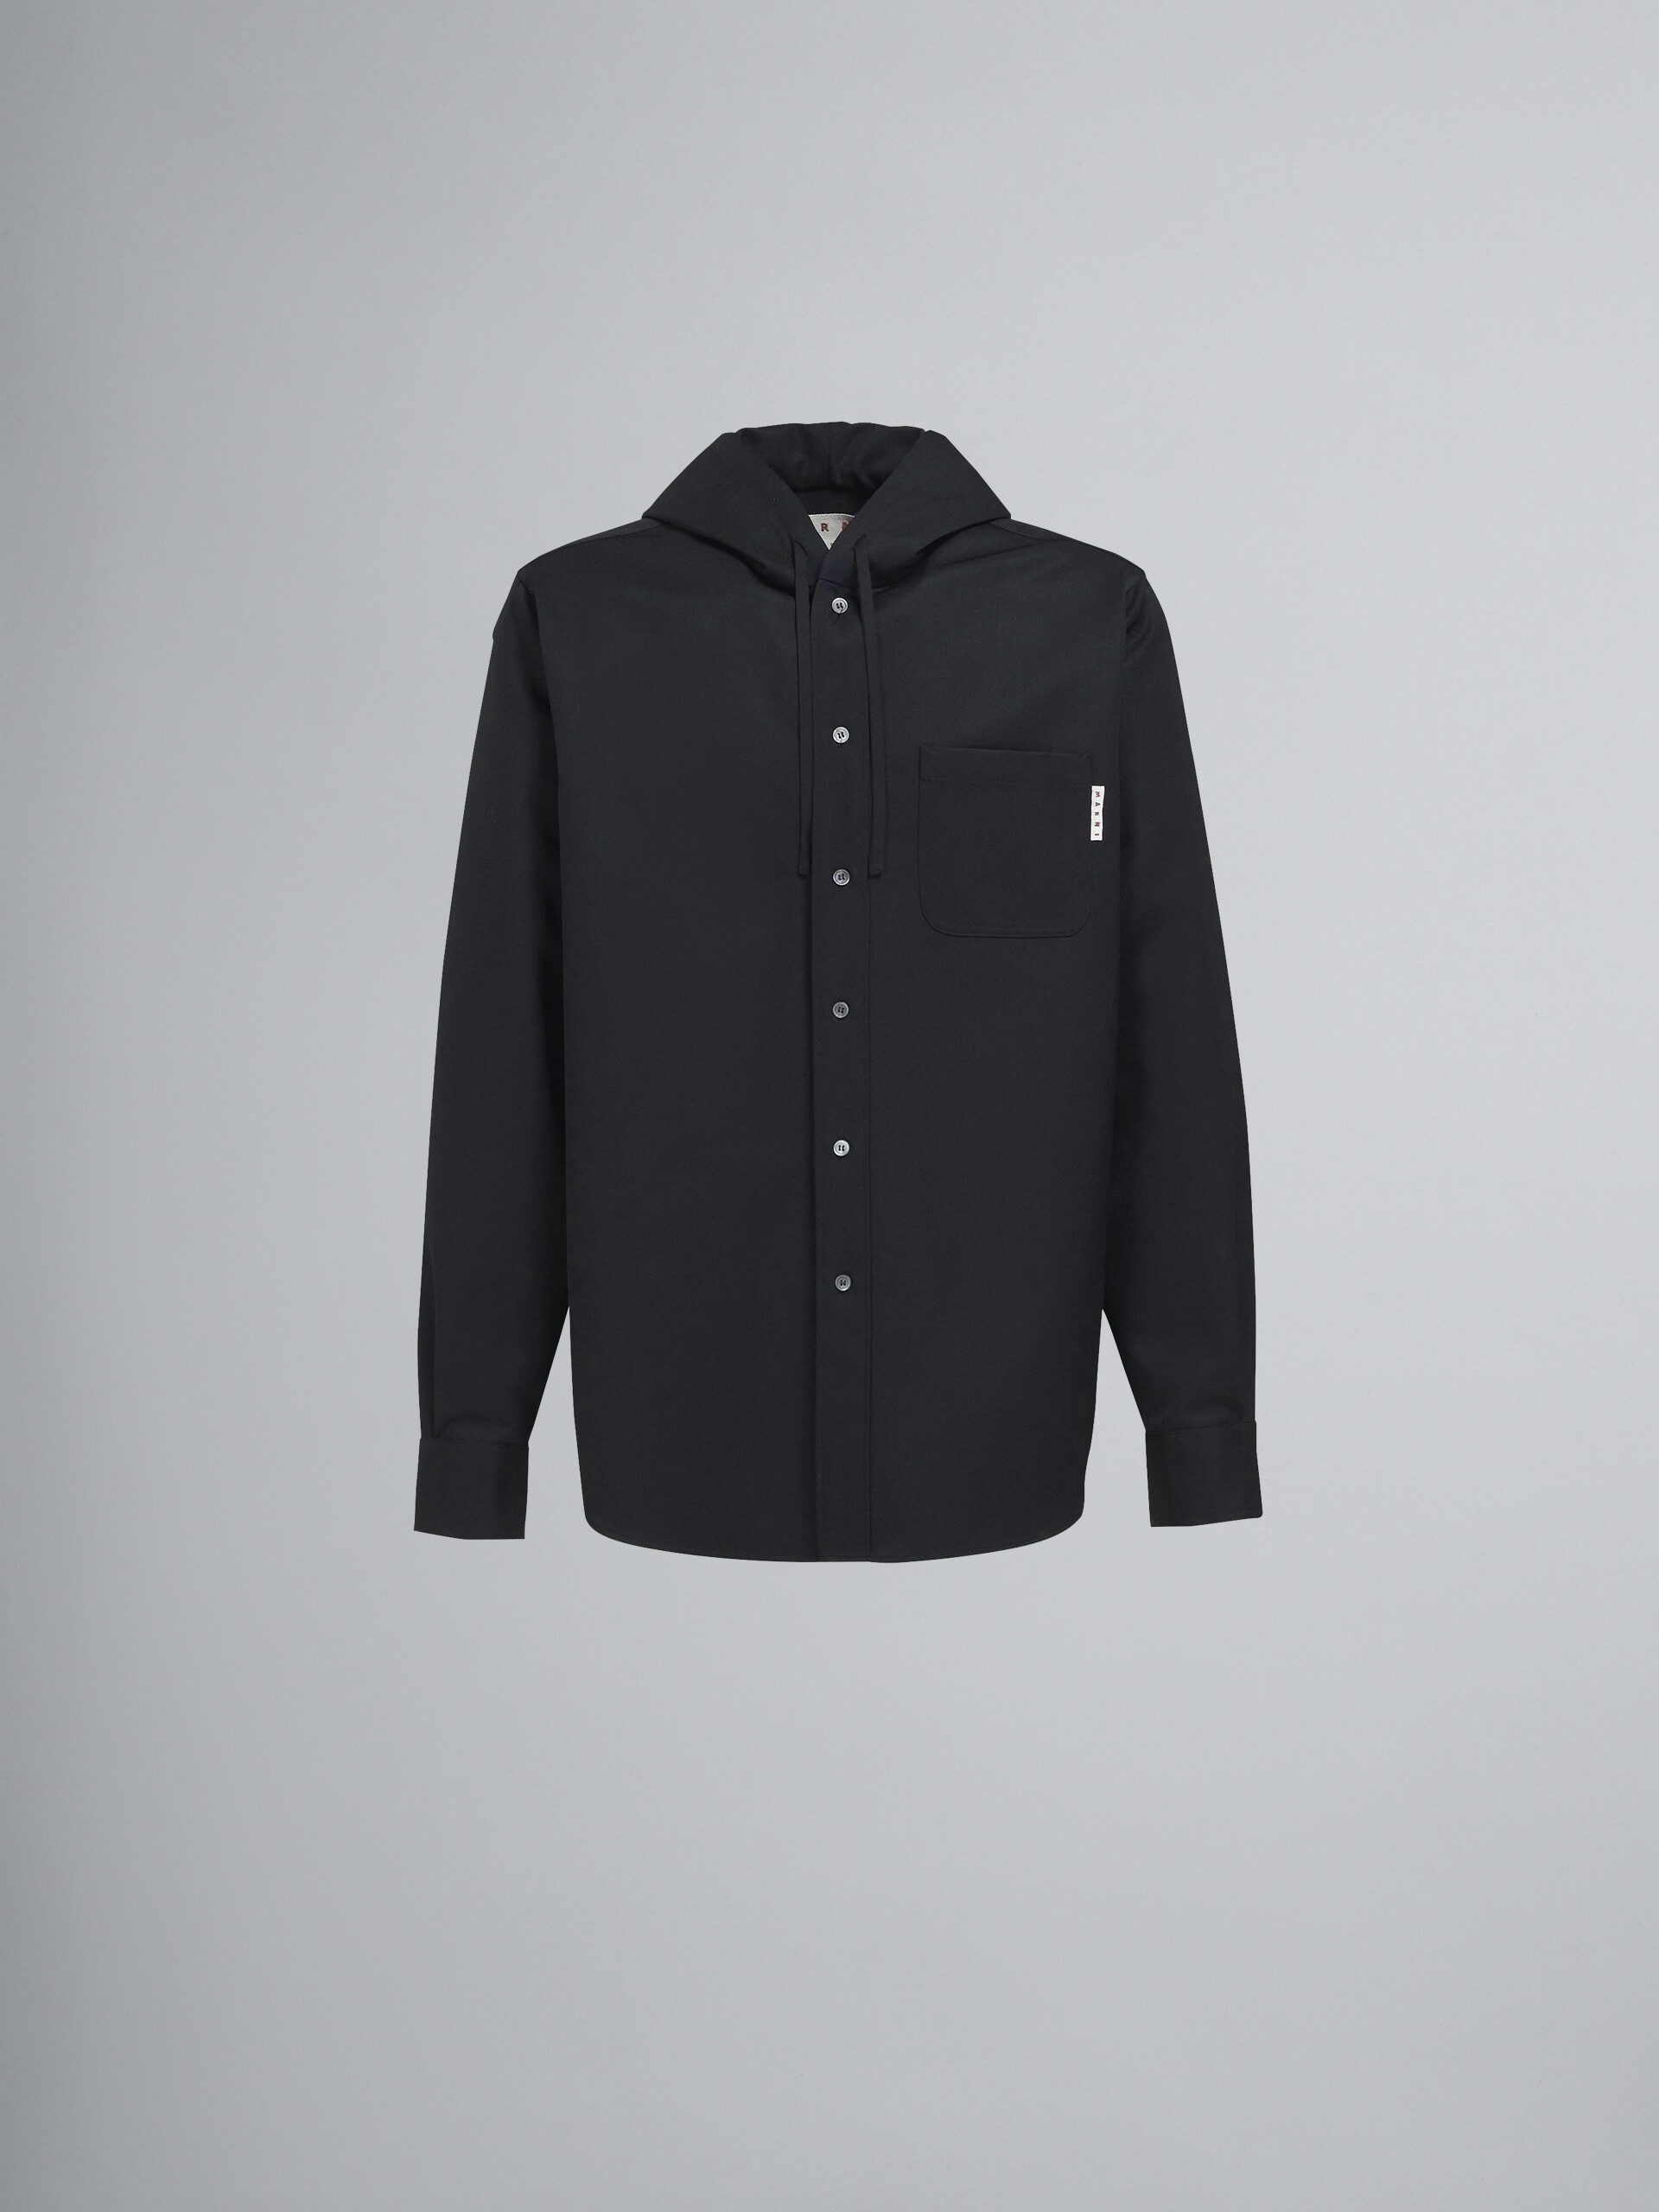 Black wool gabardine overshirt - Shirts - Image 1